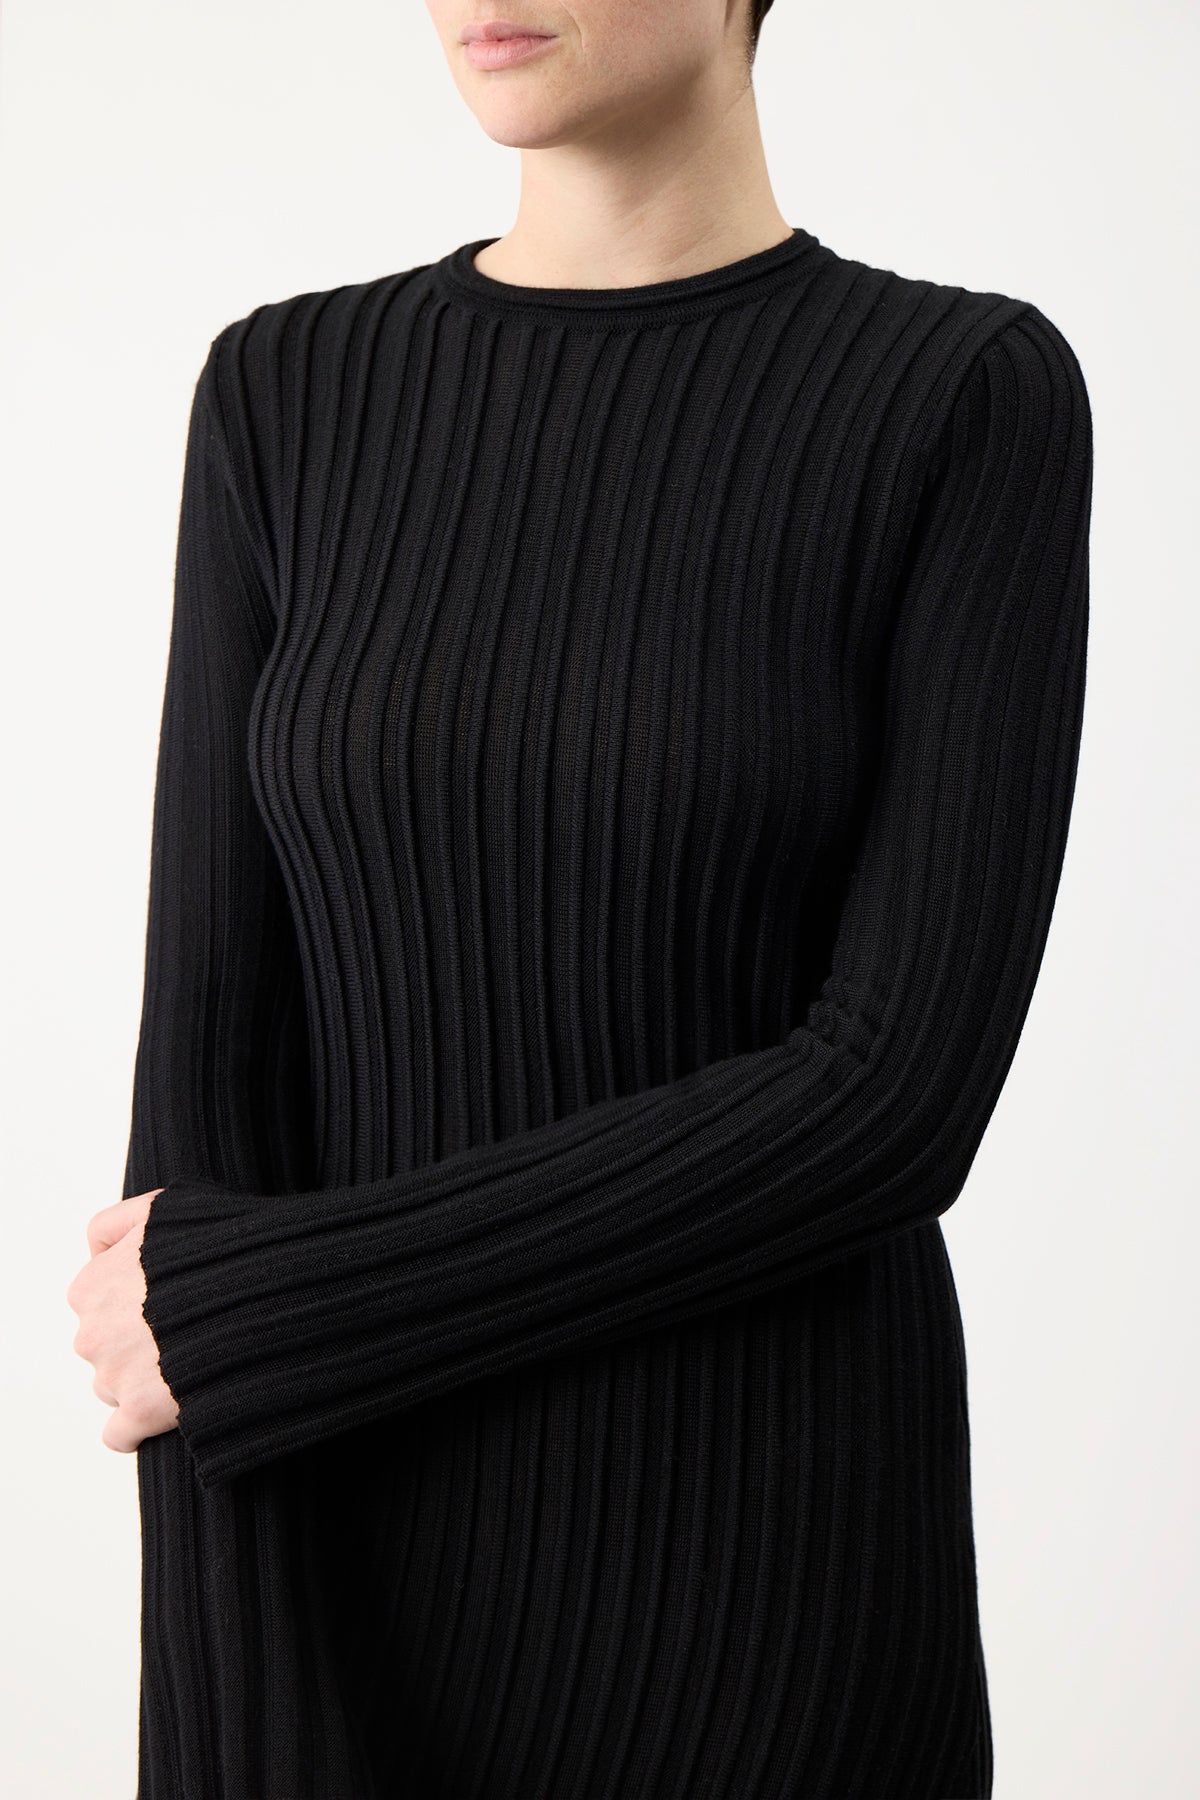 Fiona Dress in Black Colorblock Silk Cashmere